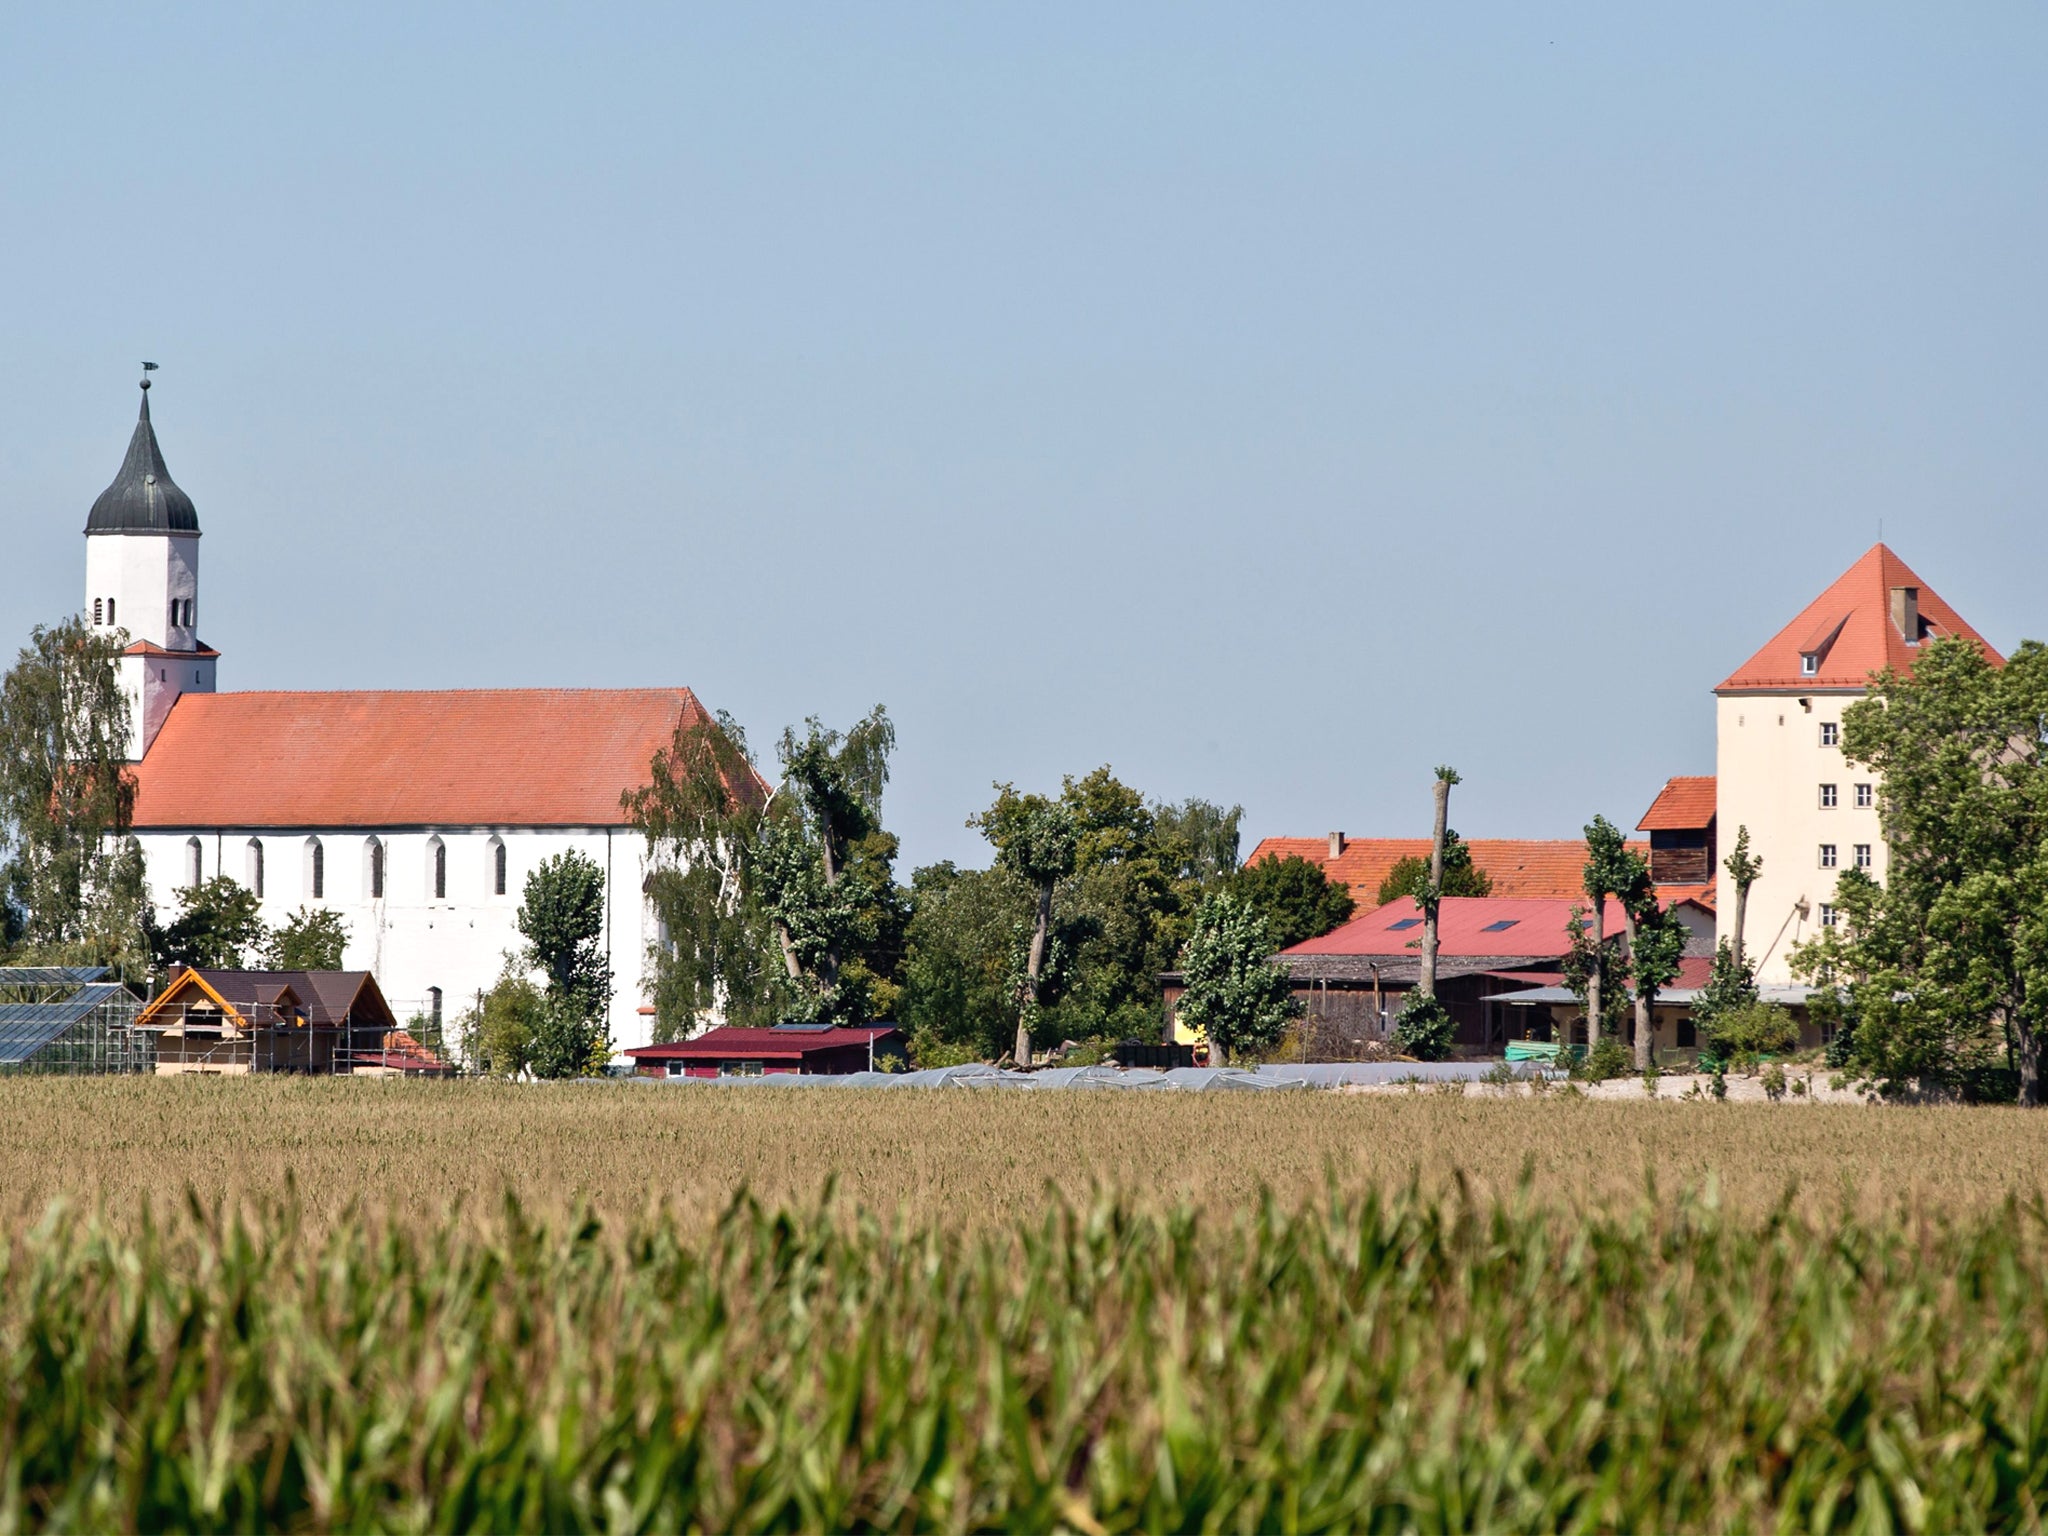 The village of Klosterzimmern near Deiningen in Bavaria serves as a base for the secretive sect